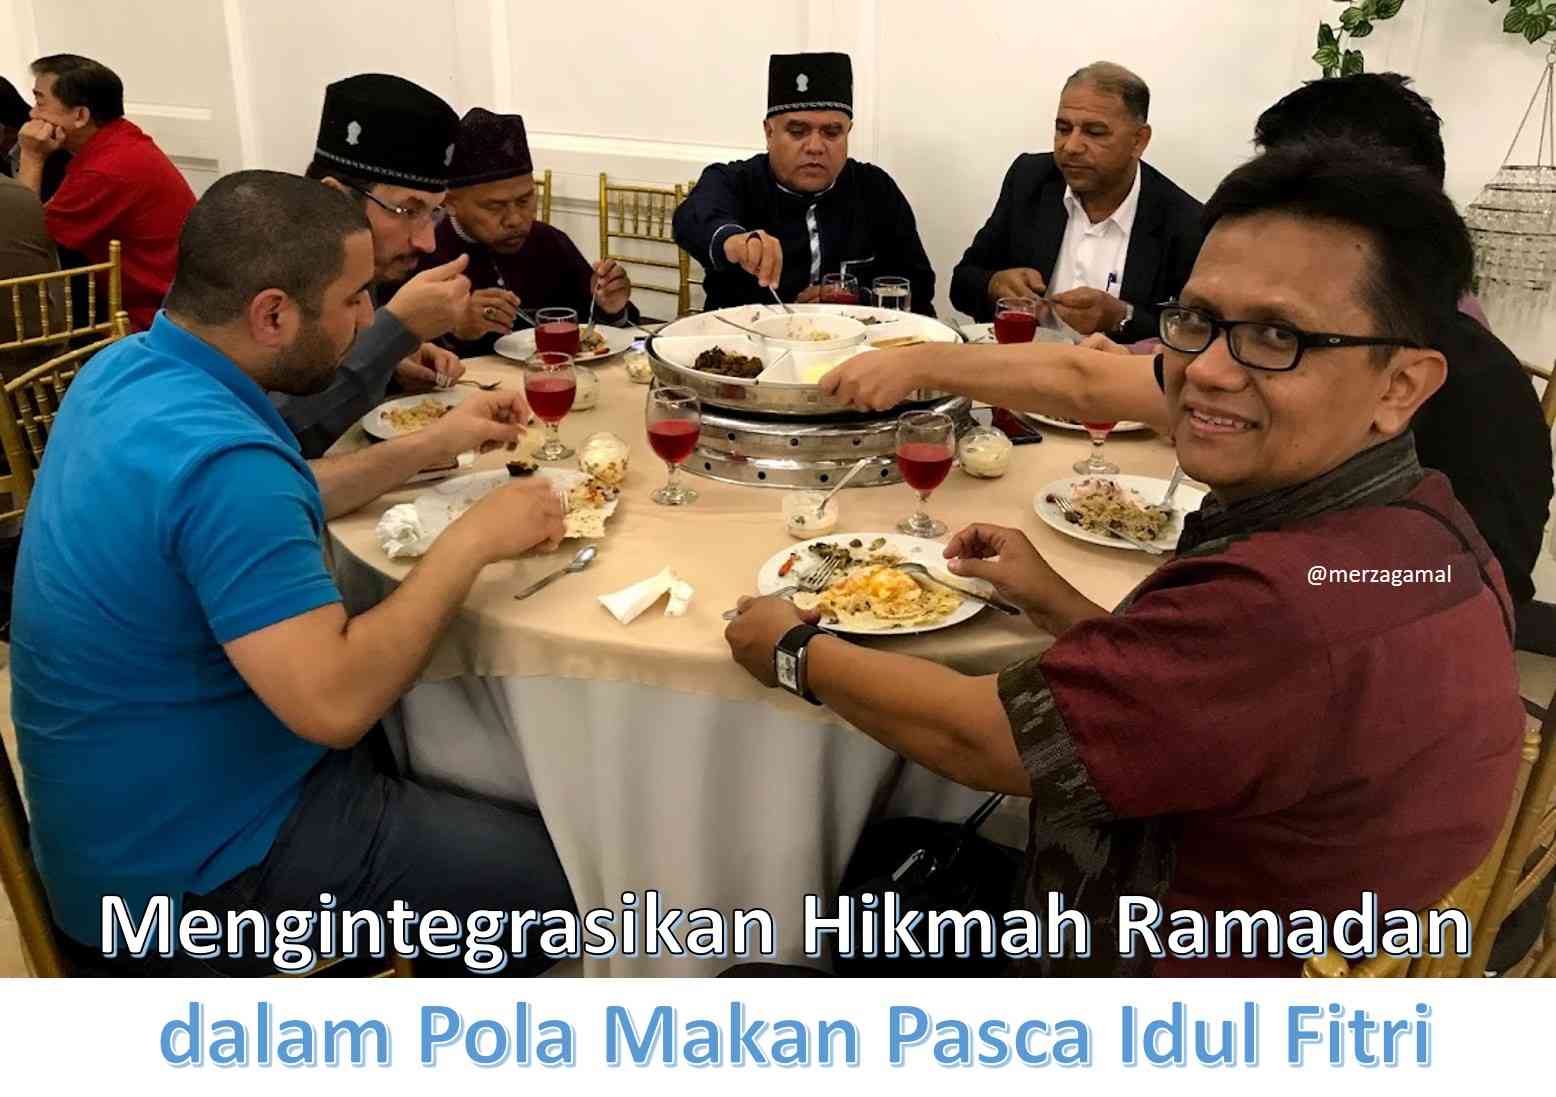 Image: Mengintegrasikan Hikmah Ramadan dalam Pola Makan Pasca Idul Fitri (by Merza Gamal)